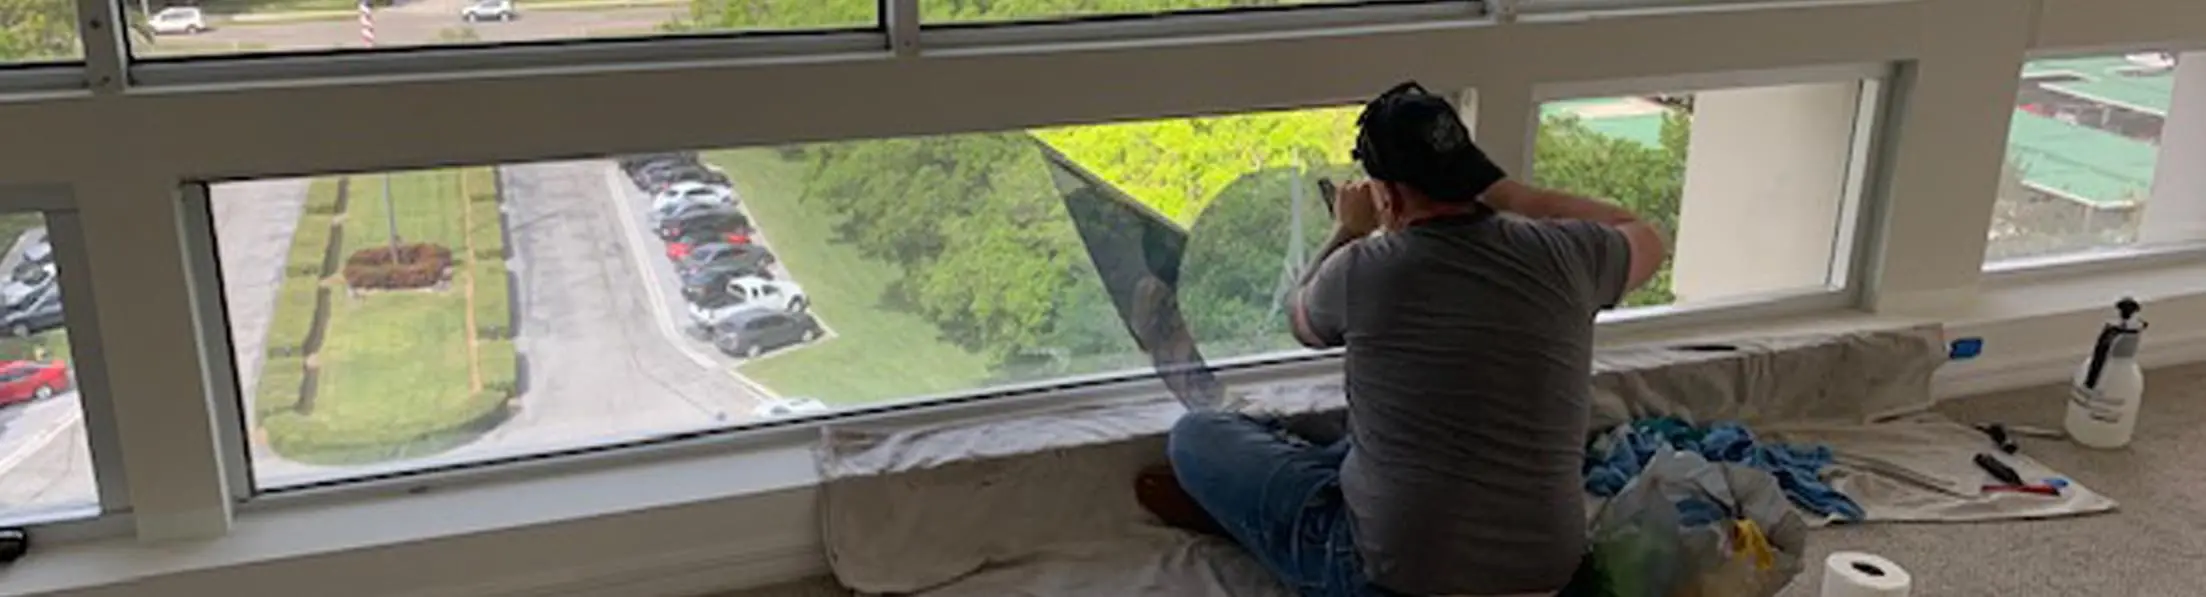 Man sitting on carpet installing window film.